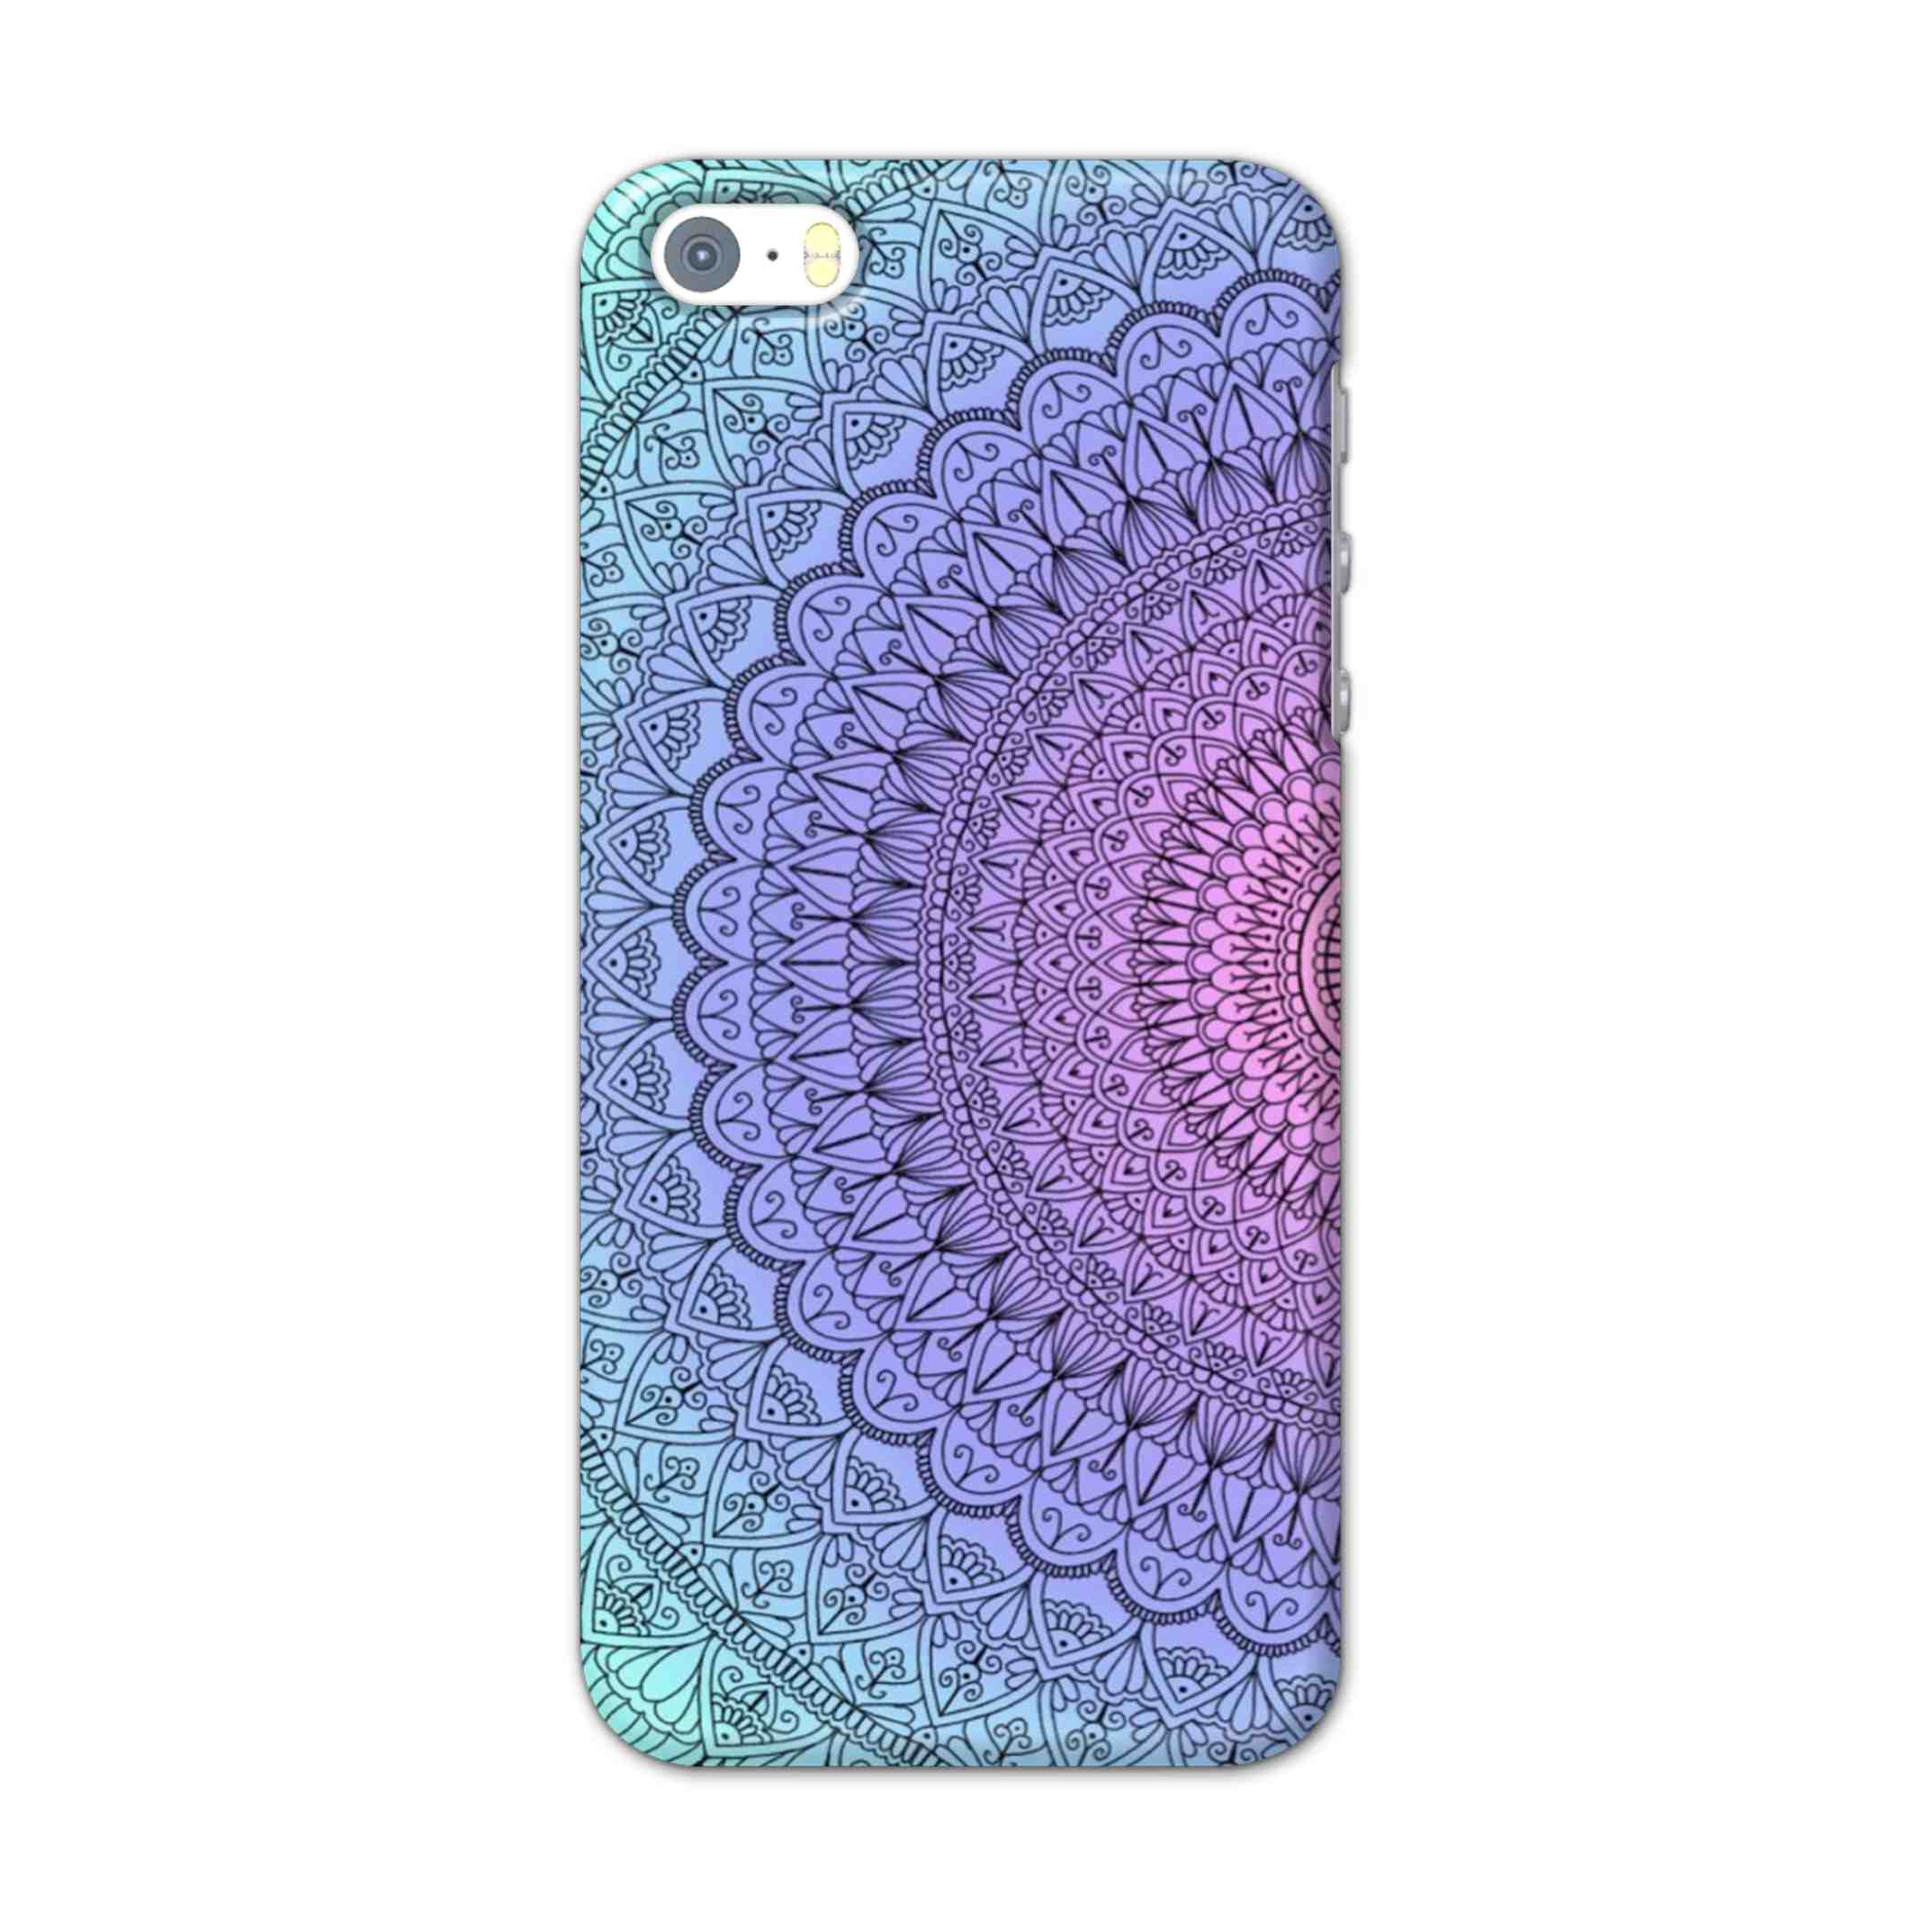 Buy Colourful Mandala Hard Back Mobile Phone Case/Cover For Apple Iphone SE Online